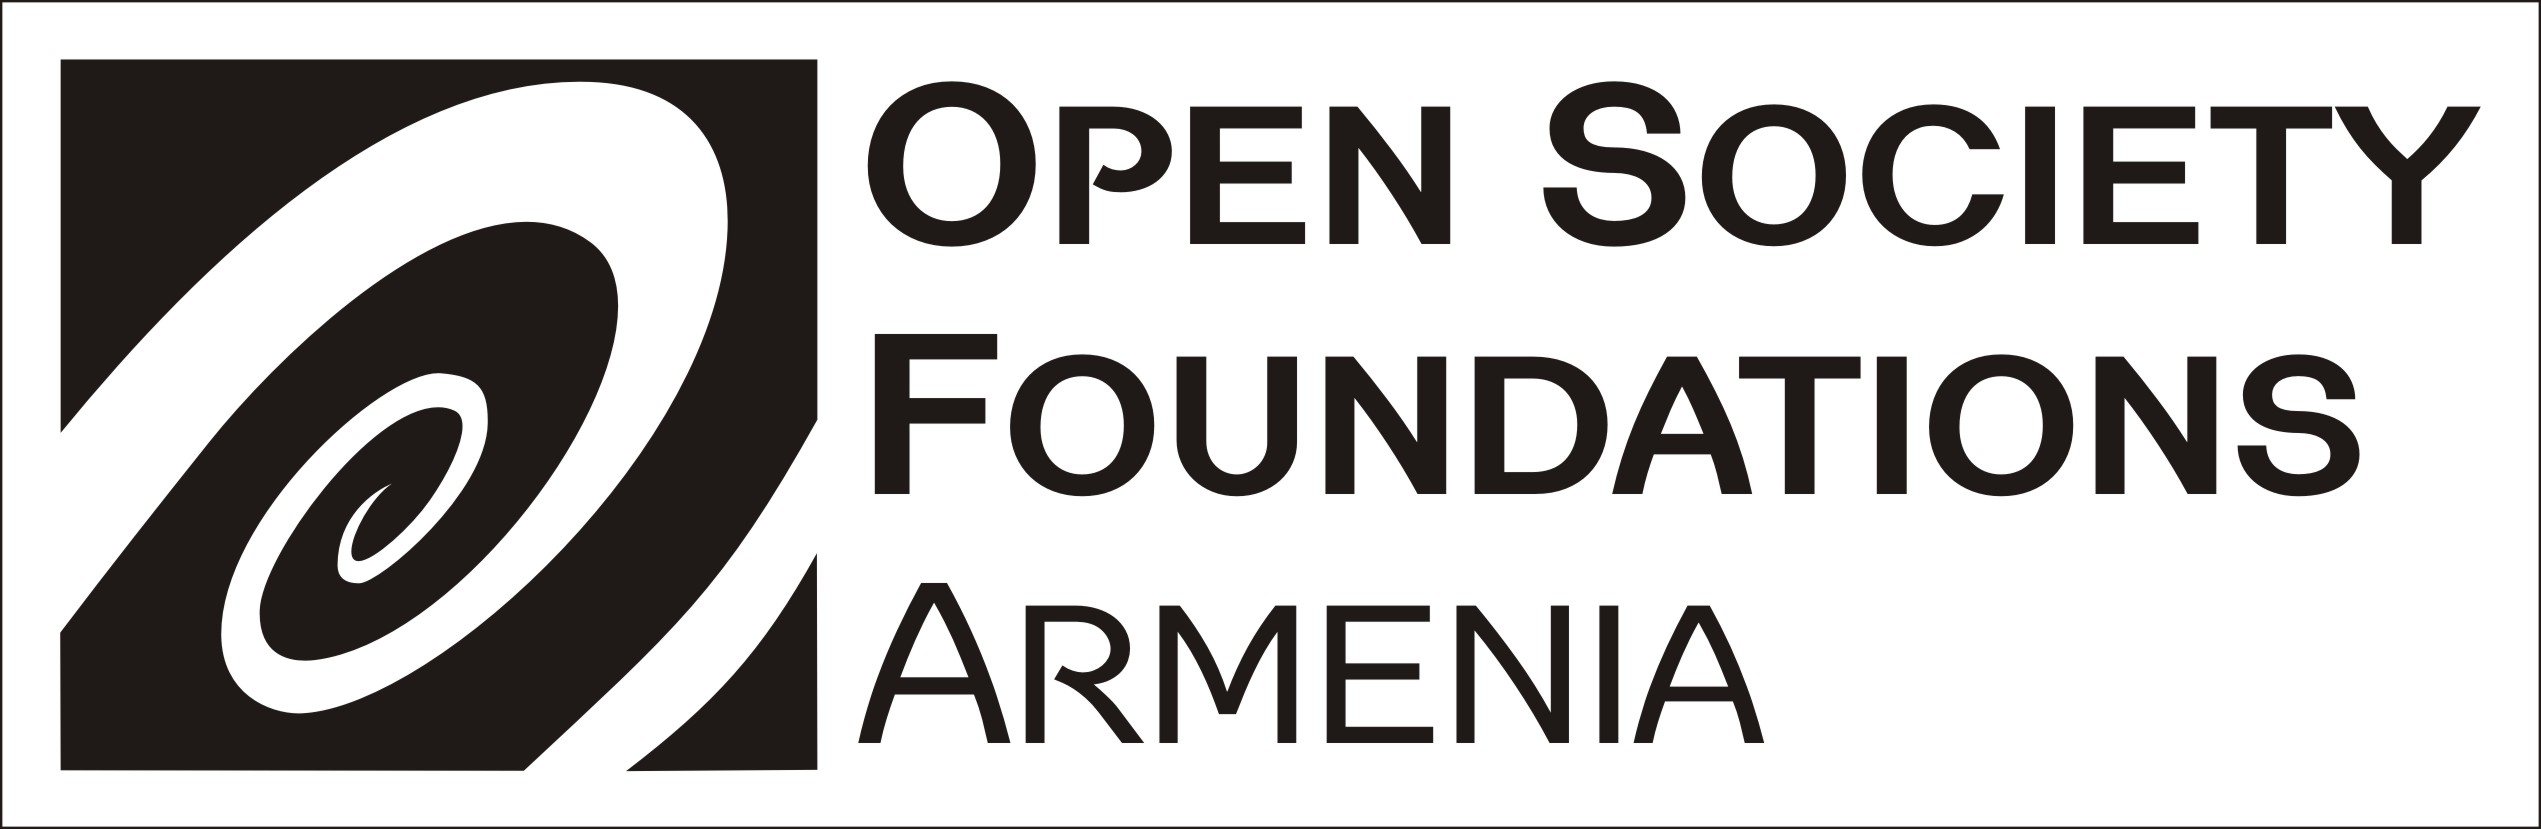 Open society. Фонд Сороса эмблема. Фонды «открытое общество». Институт открытое общество. Open Society Foundations Armenia.